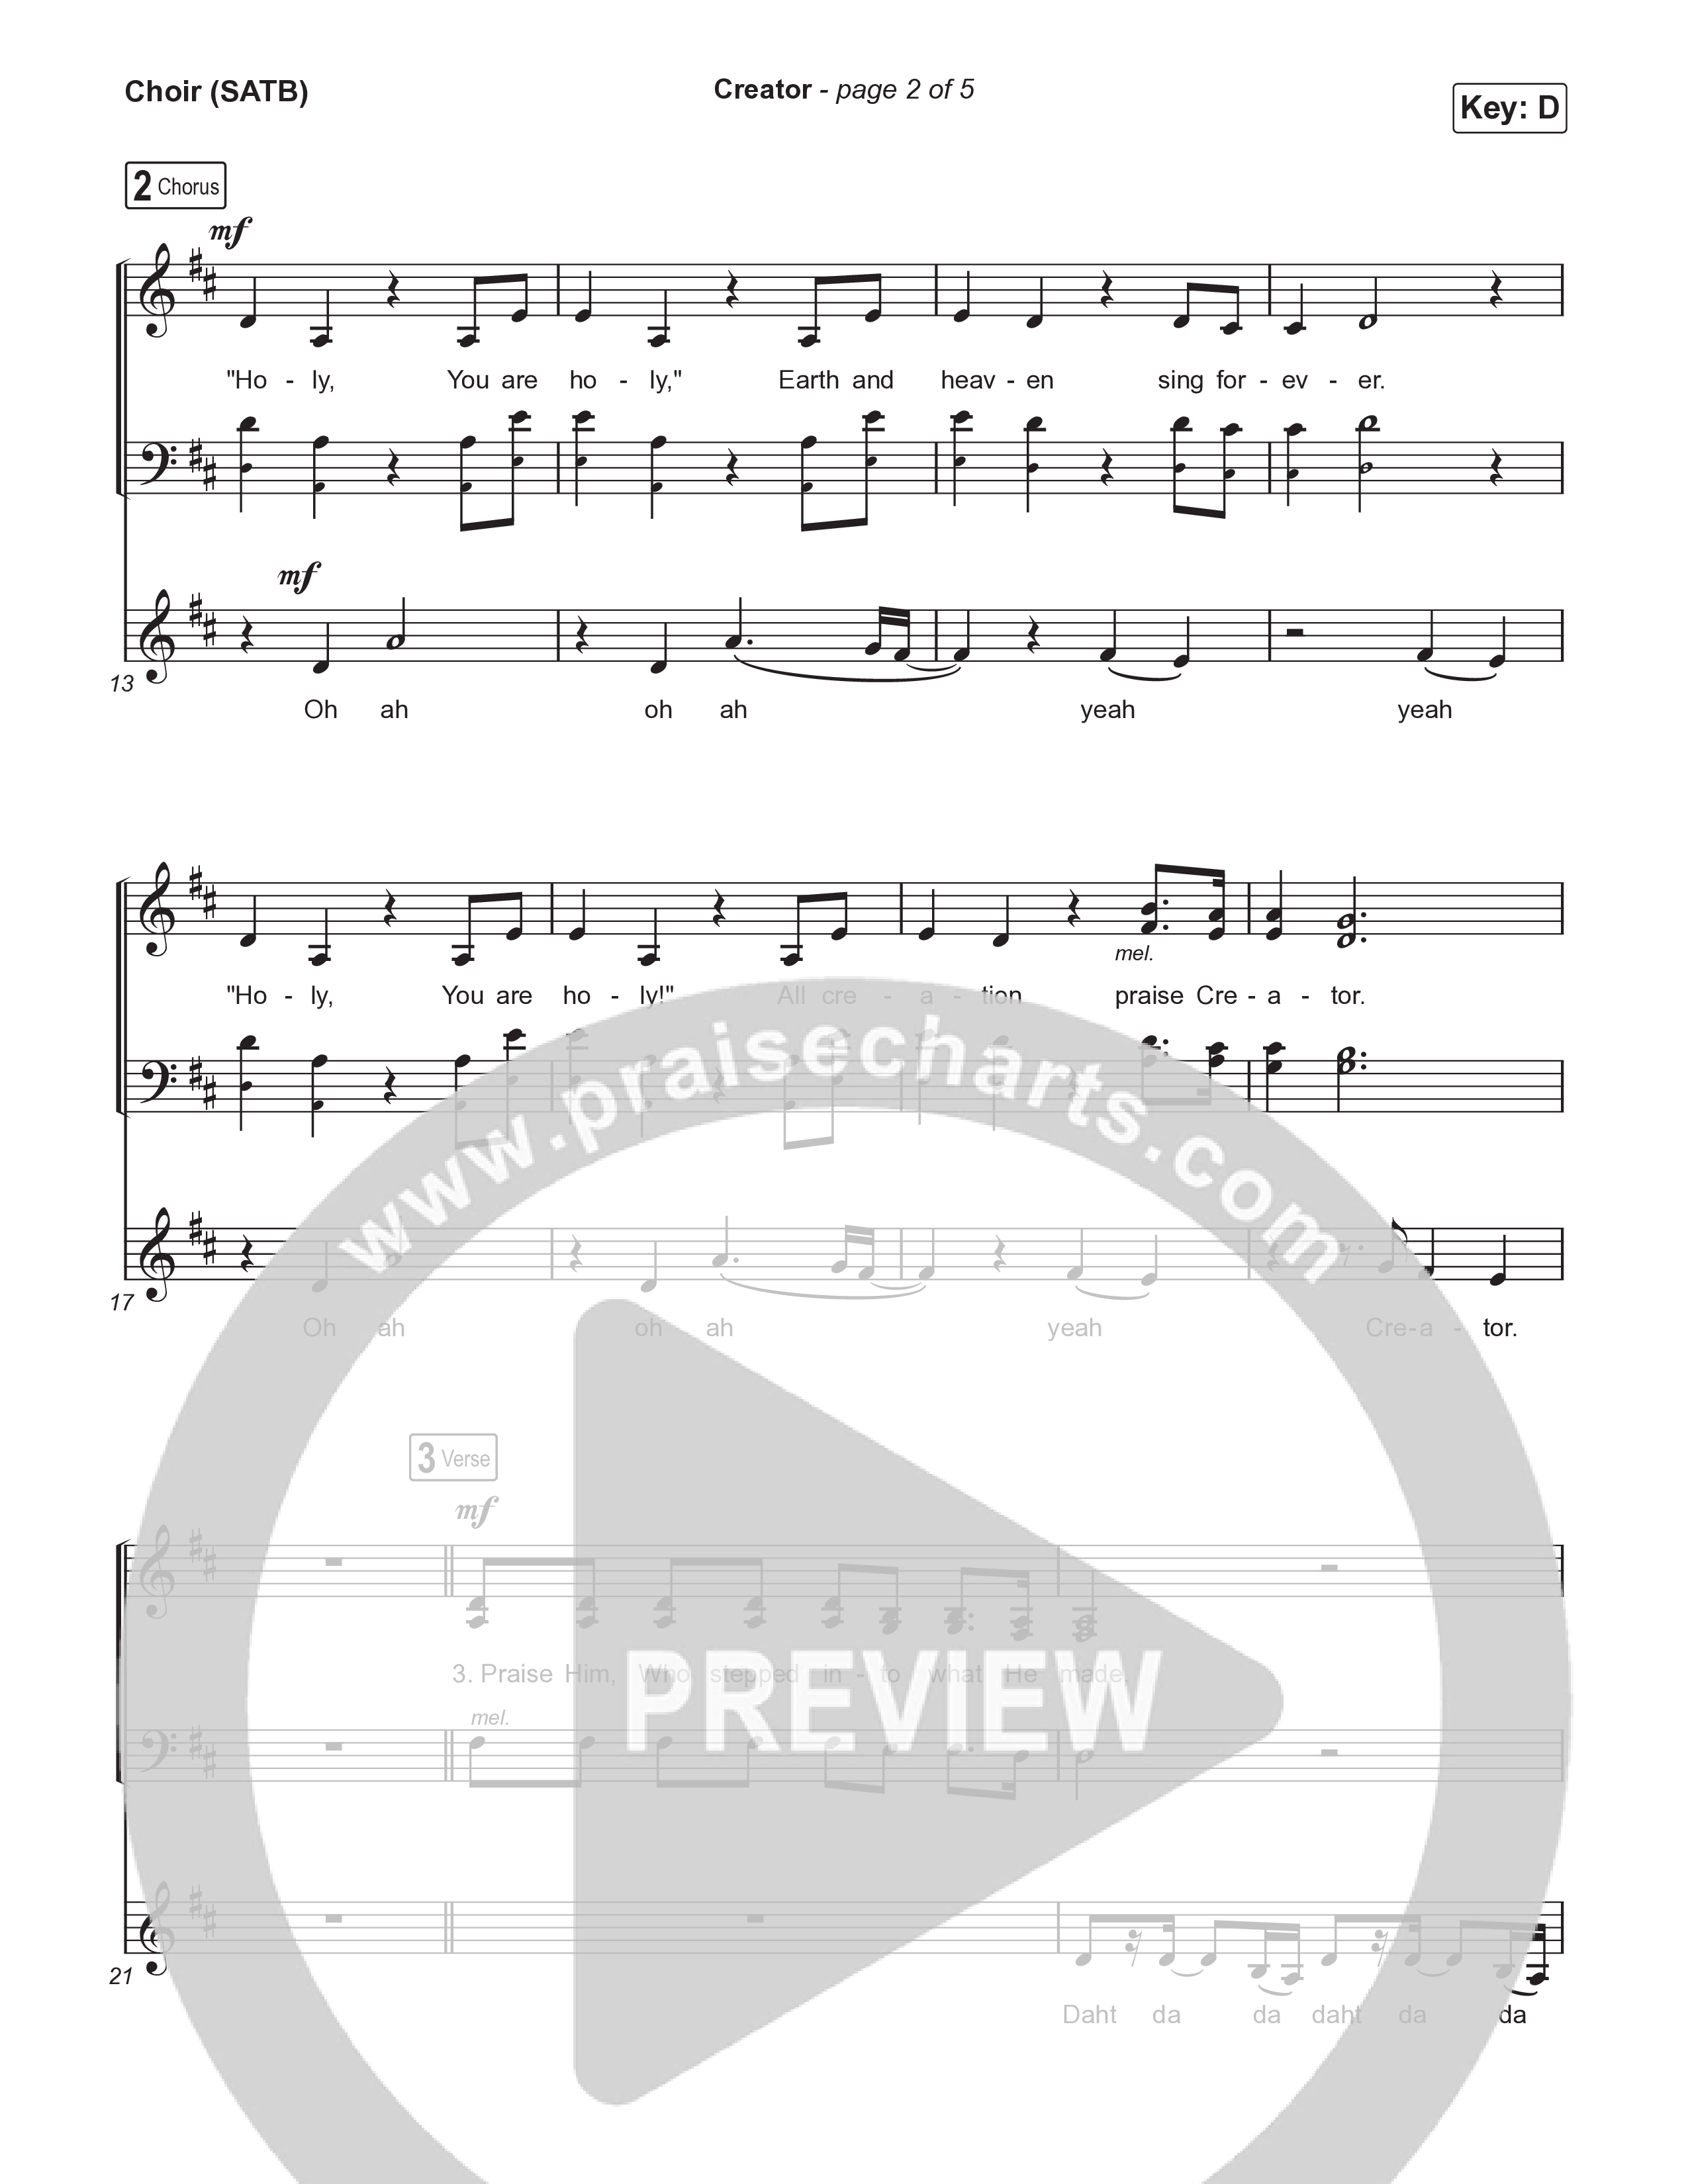 Creator (Choral Anthem SATB) Choir Sheet (SATB) (Phil Wickham / Arr. Mason Brown)